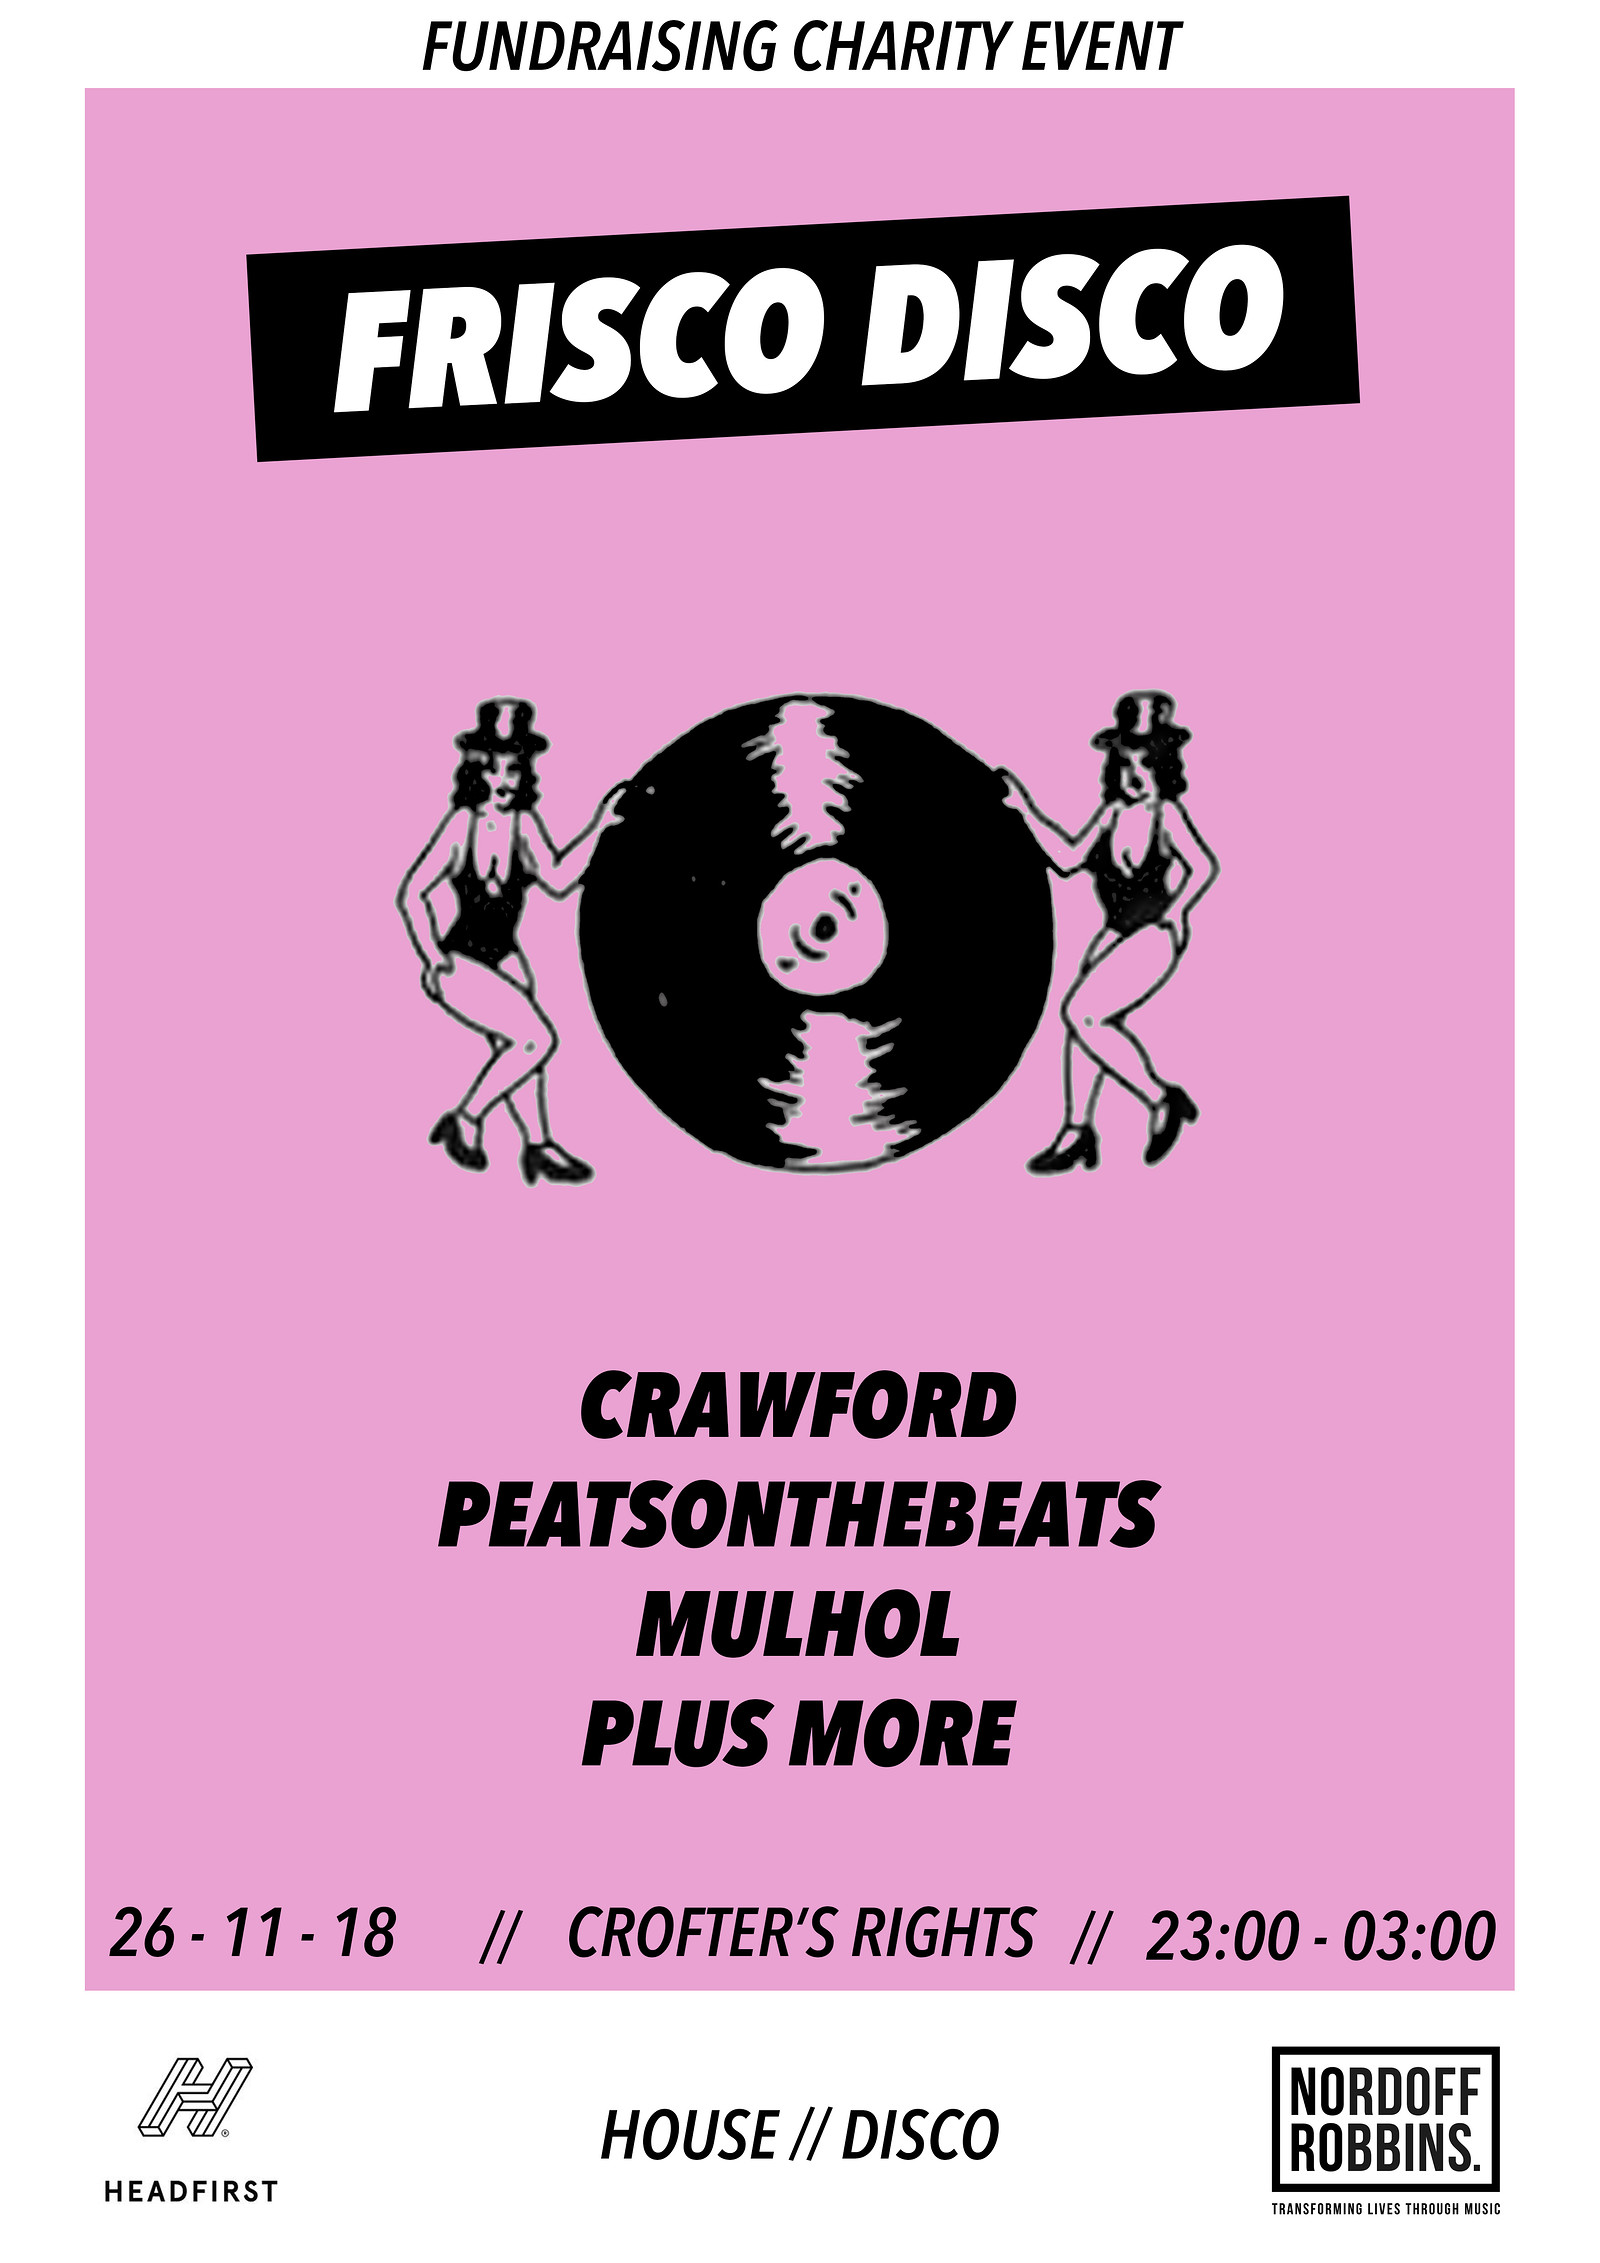 CHIX Presents: Frisco Disco at Crofters Rights